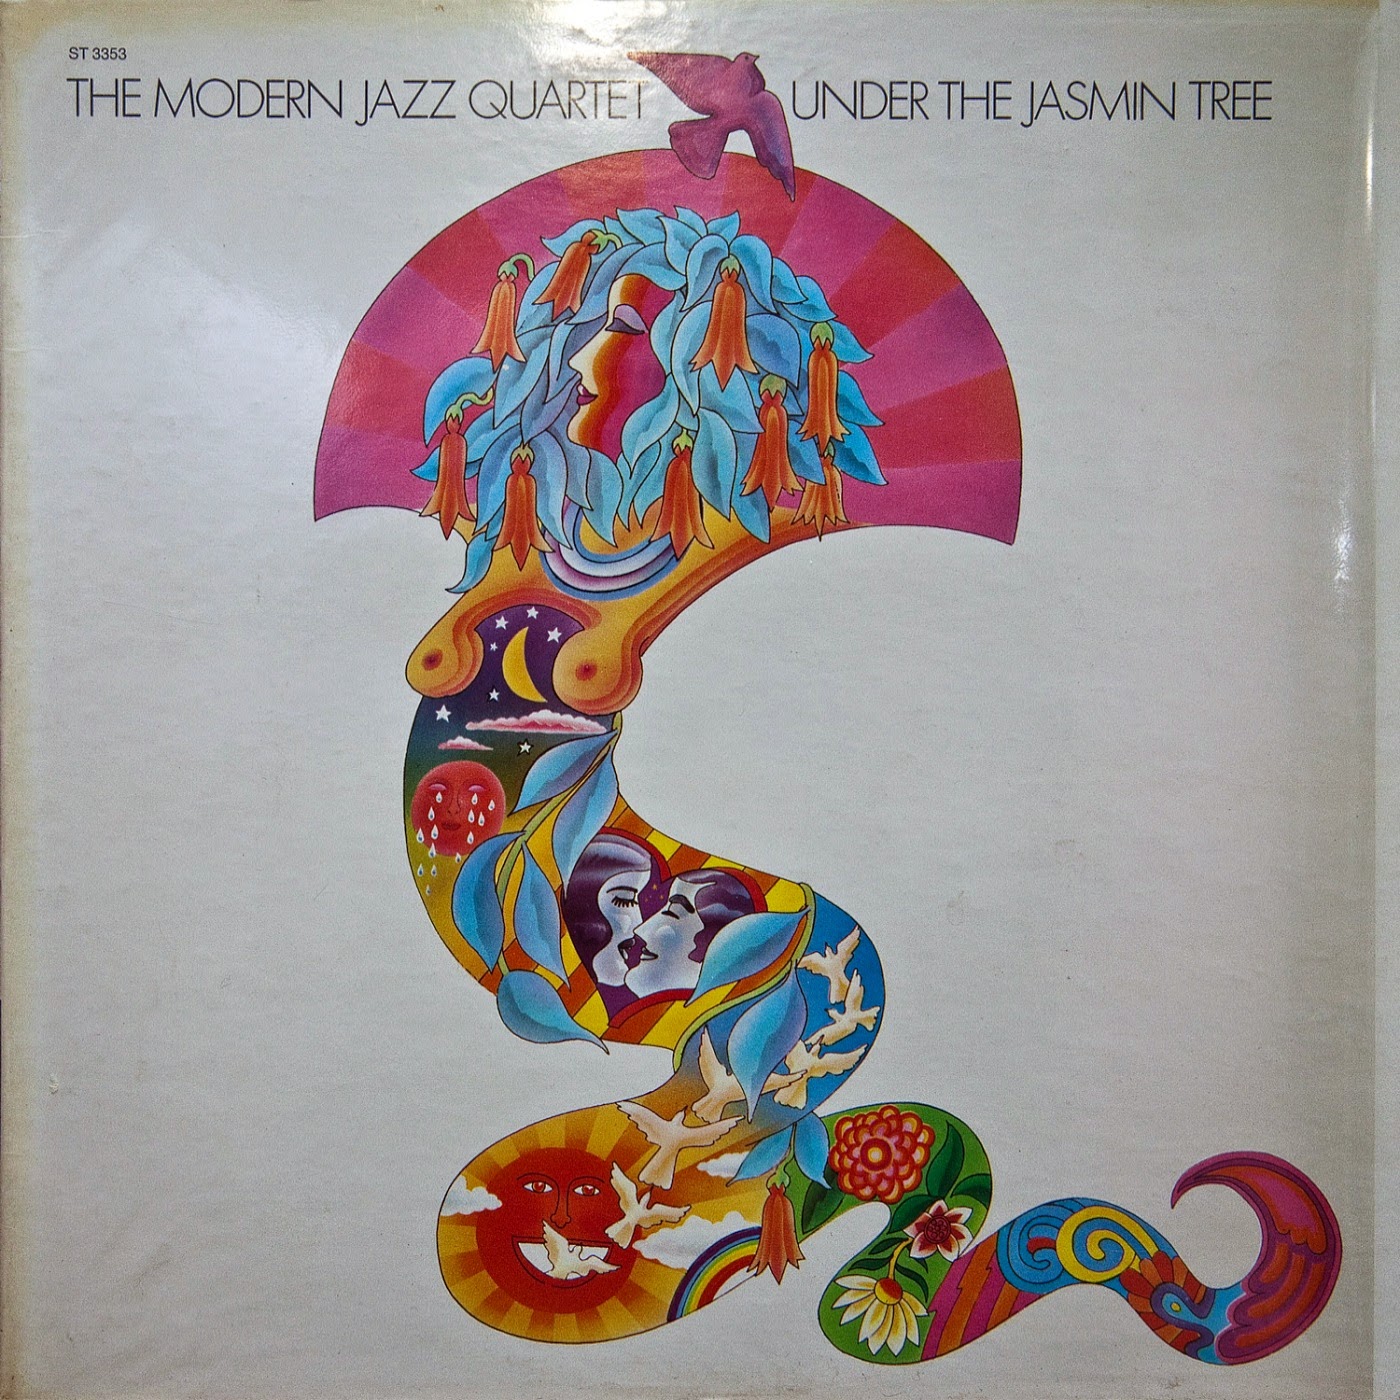 THE MODERN JAZZ QUARTET - Under the Jasmin Tree cover 